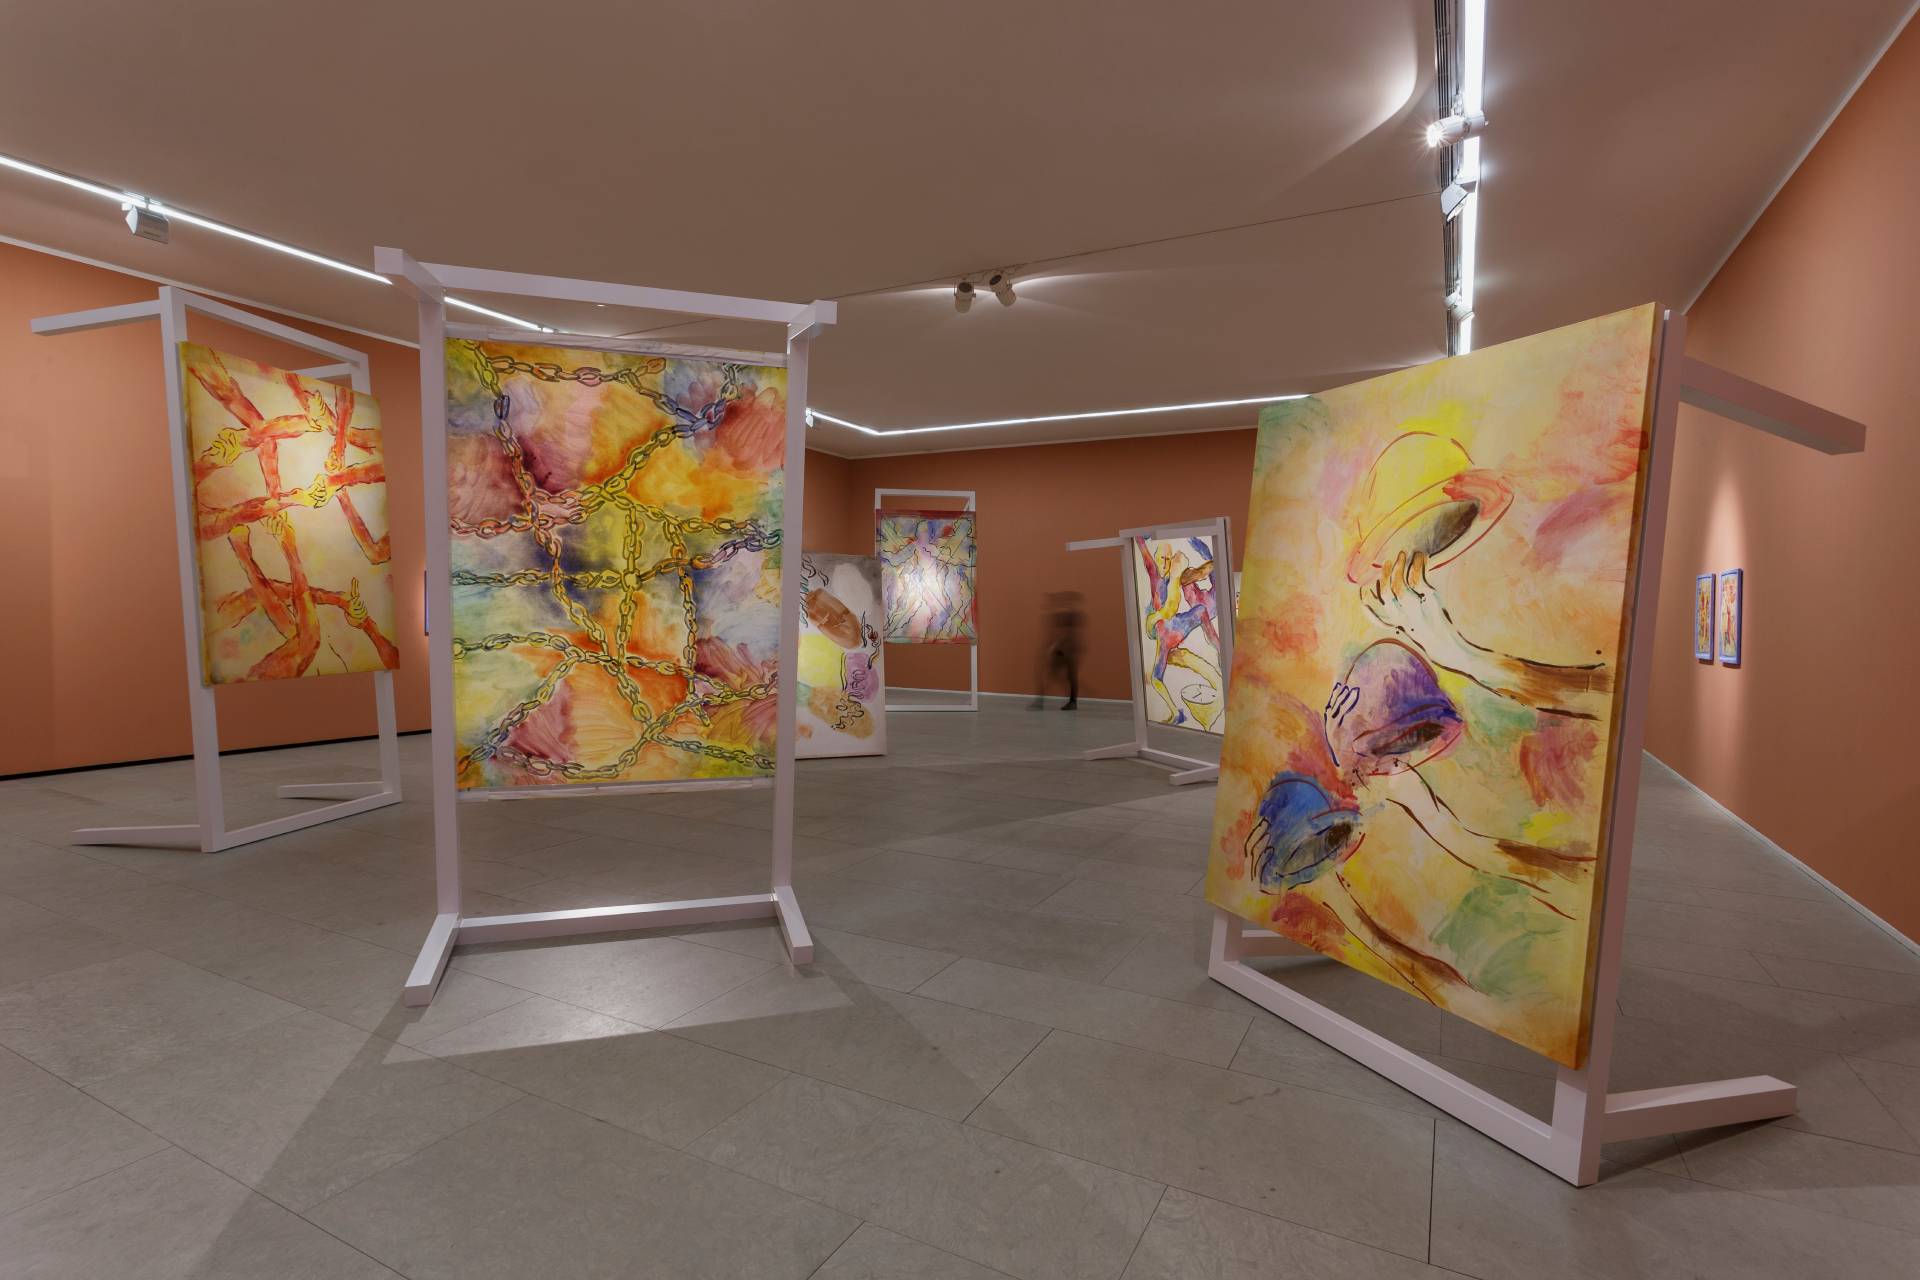 Temporary Exhibition “Escola de Lazer”, 2022